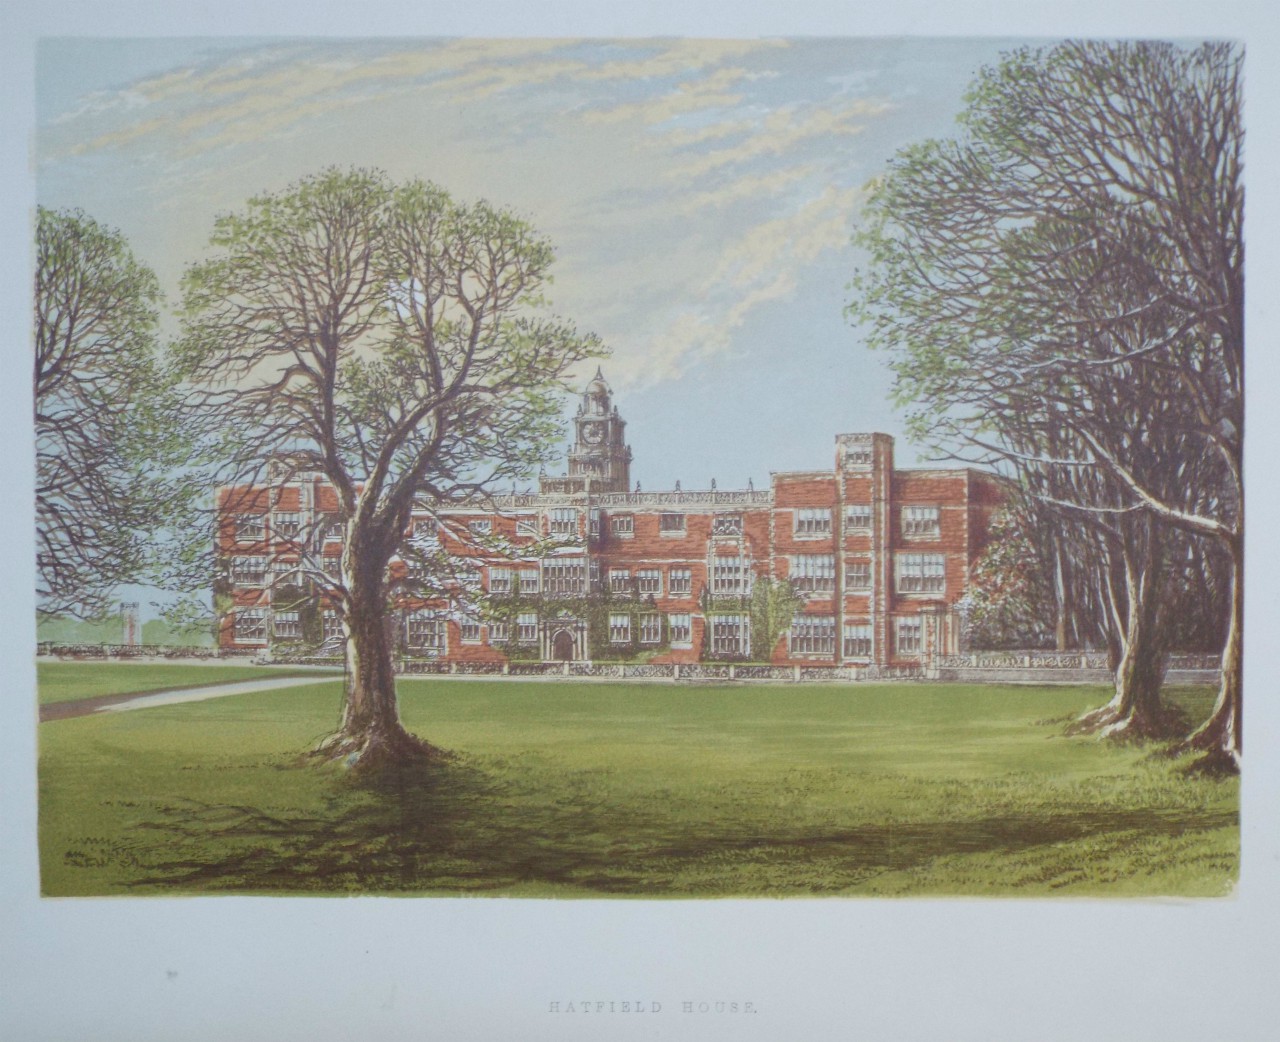 Chromo-lithograph - Hatfield House.